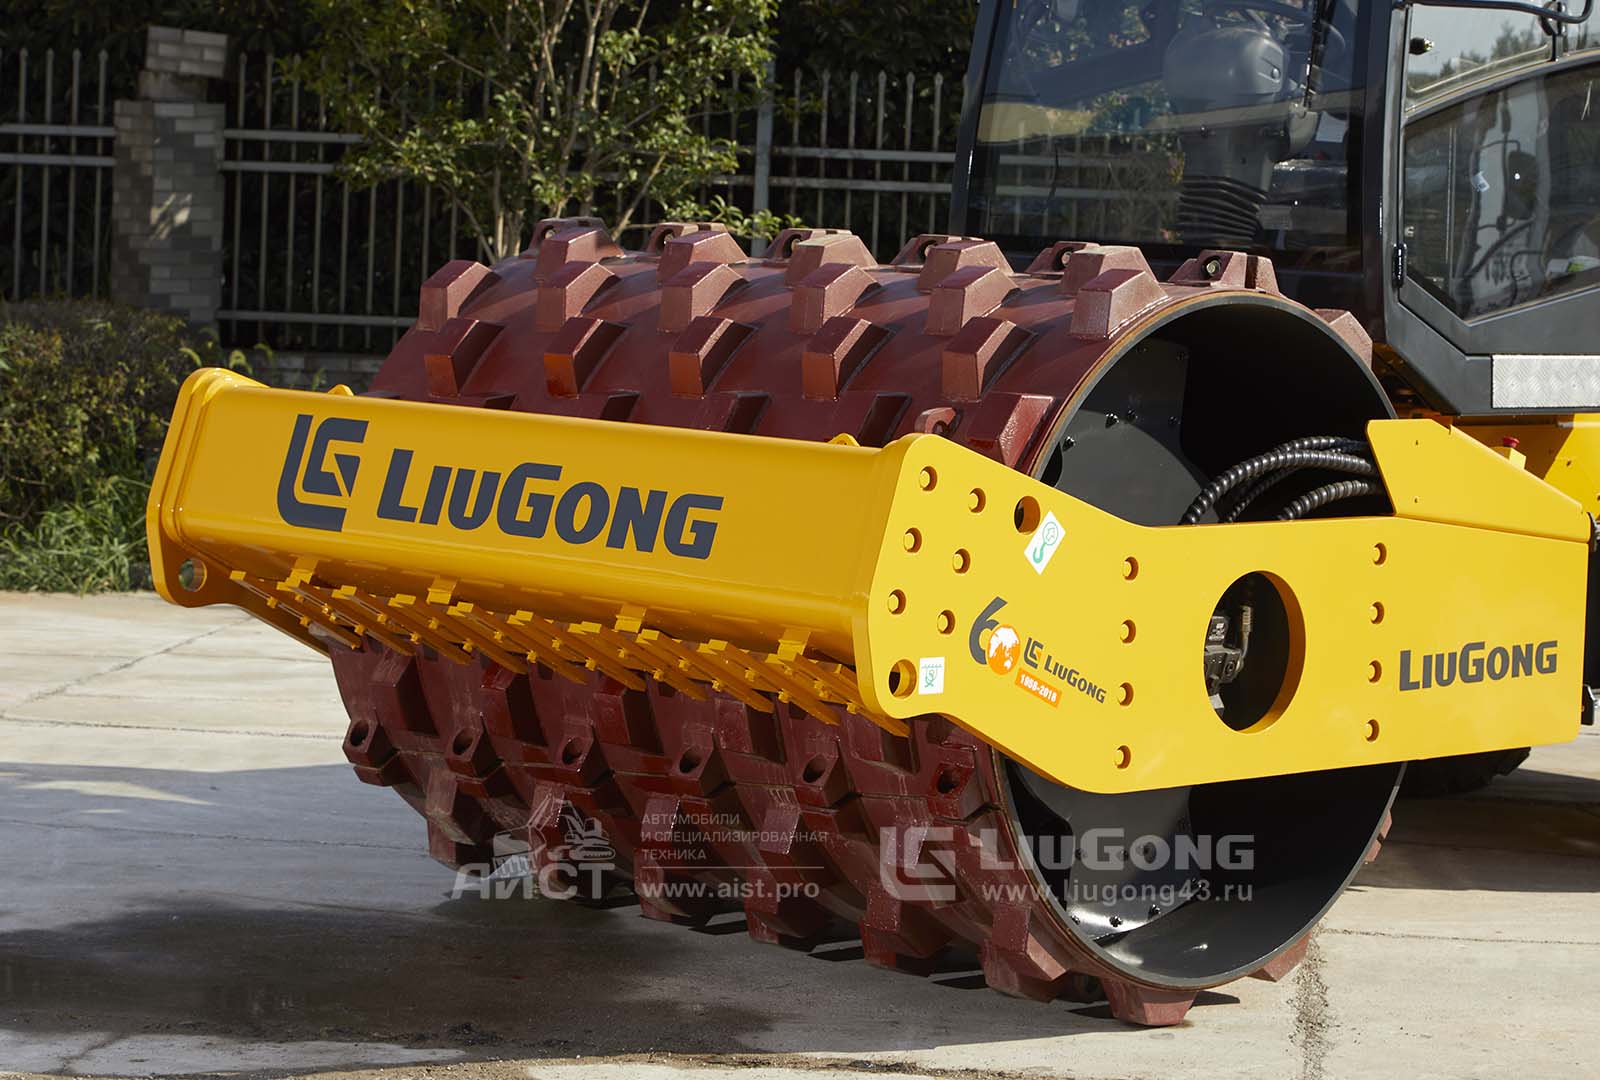   LiuGong CLG 6618